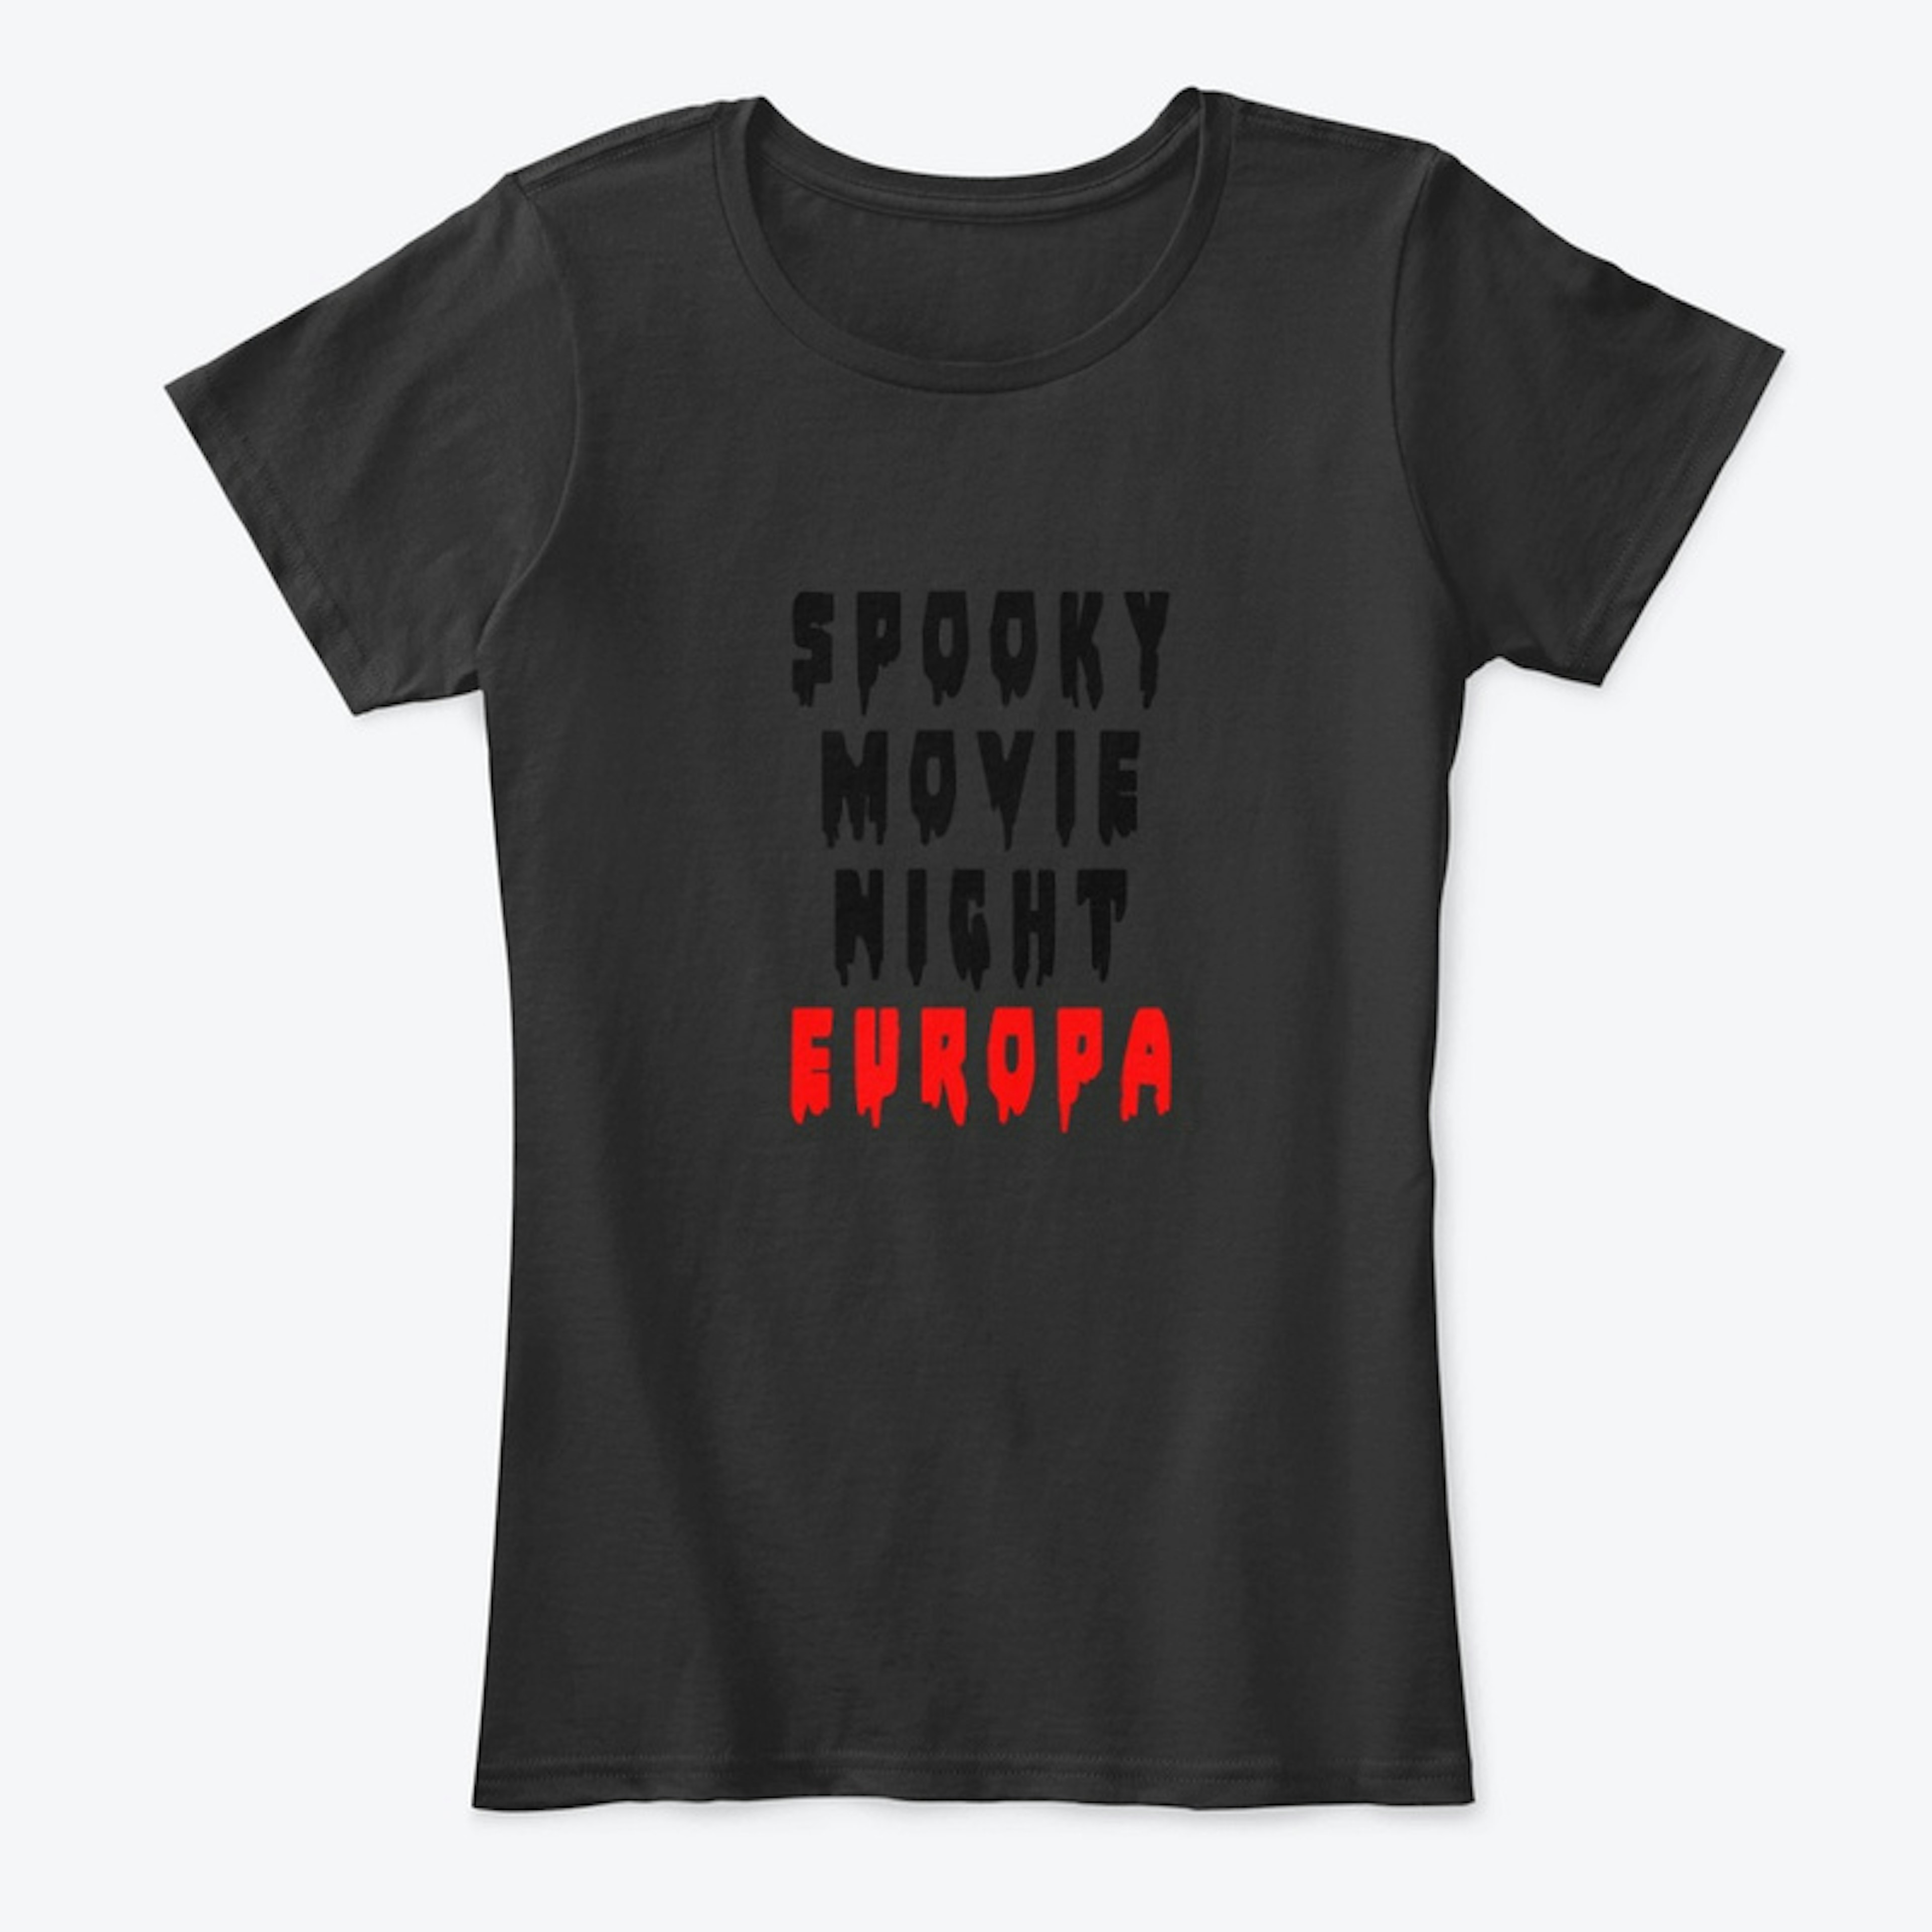 Spooky Movie Night Europa 01